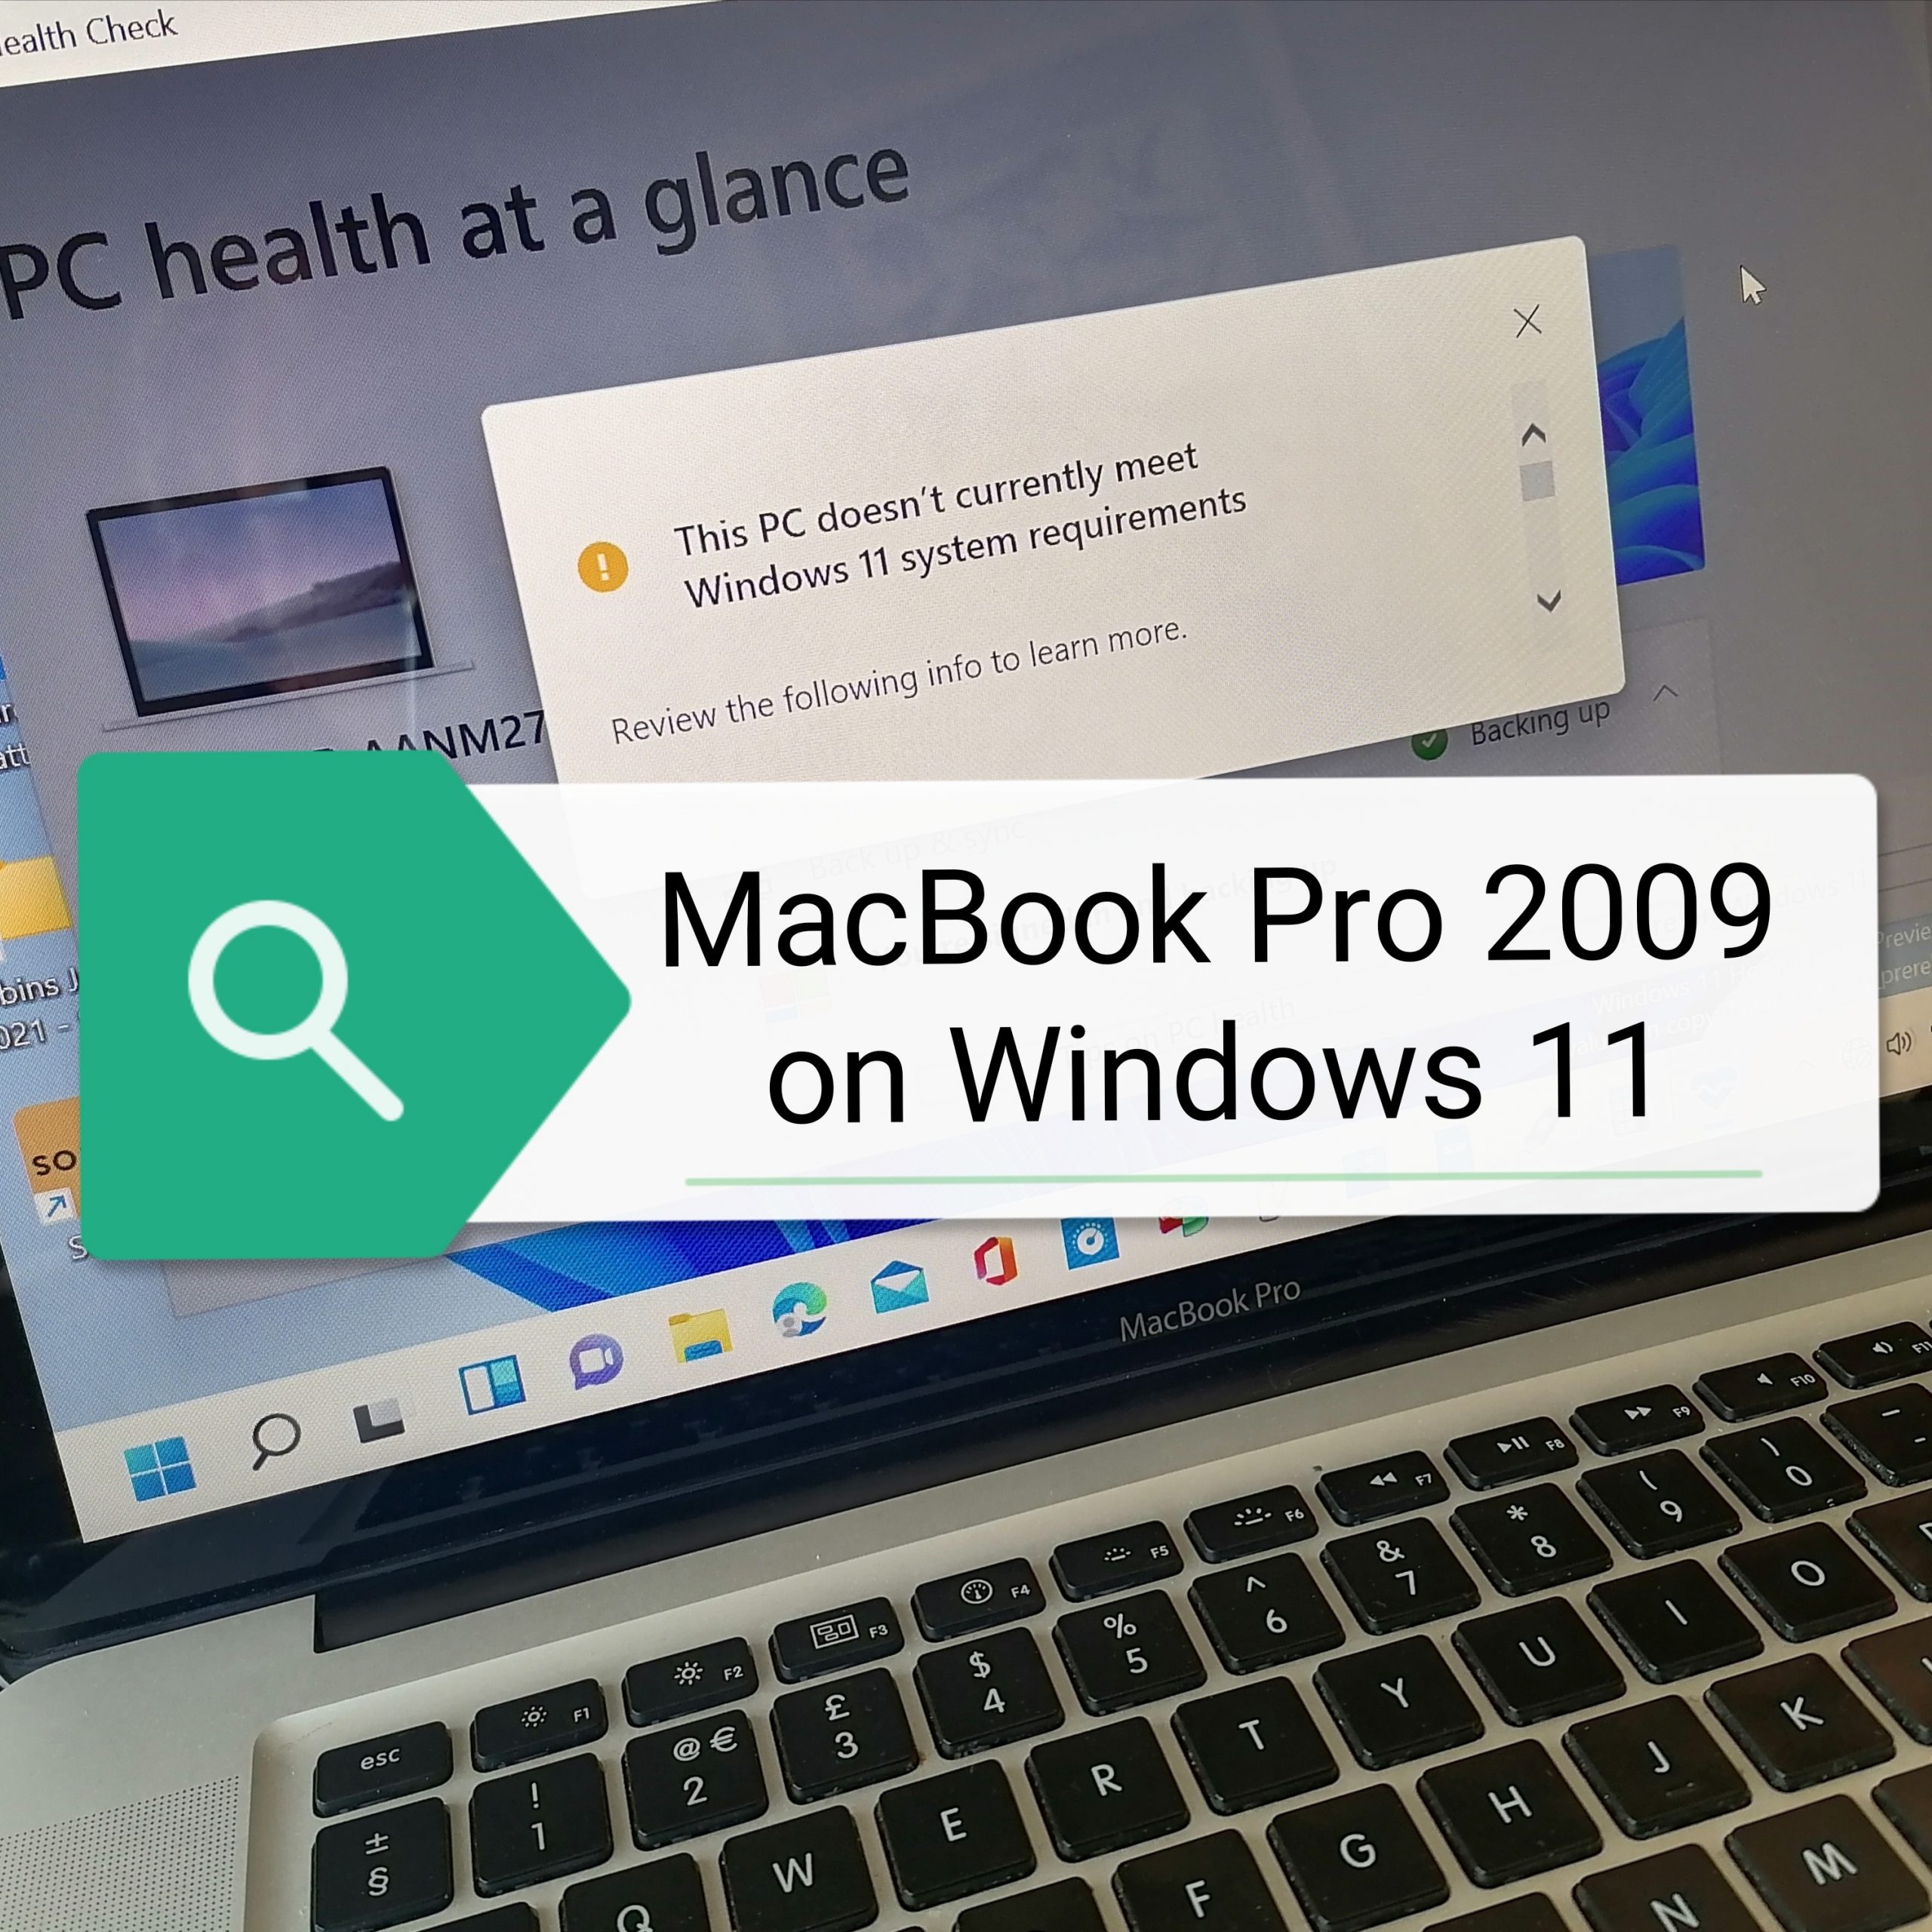 MacBook Pro 2009 on Windows 11